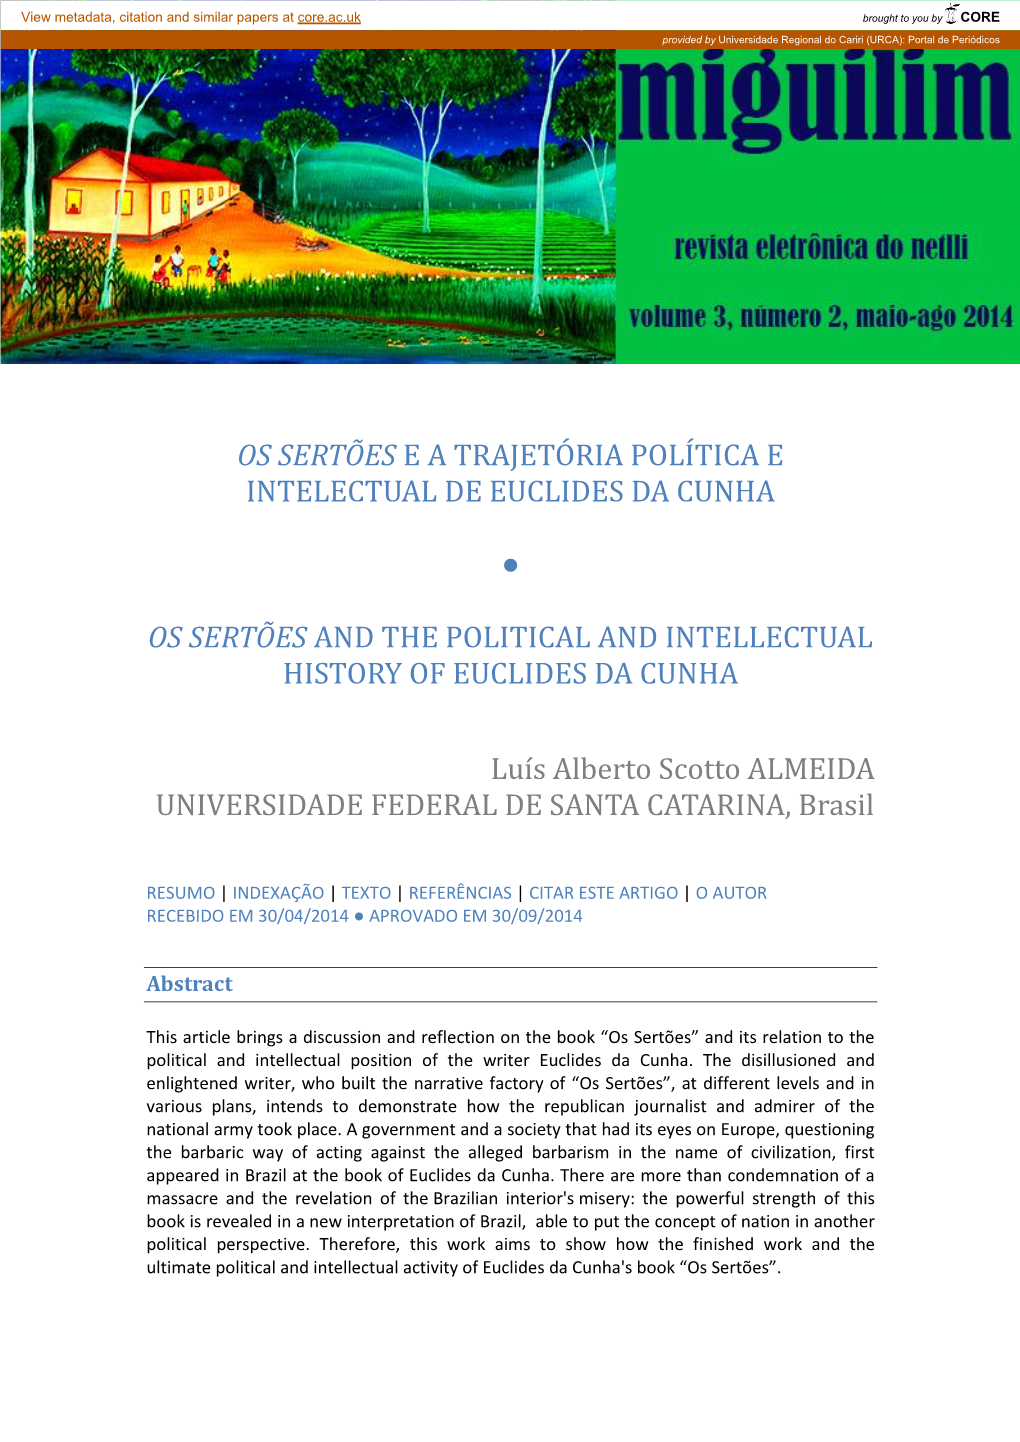 Os Sertões E a Trajetória Política E Intelectual De Euclides Da Cunha